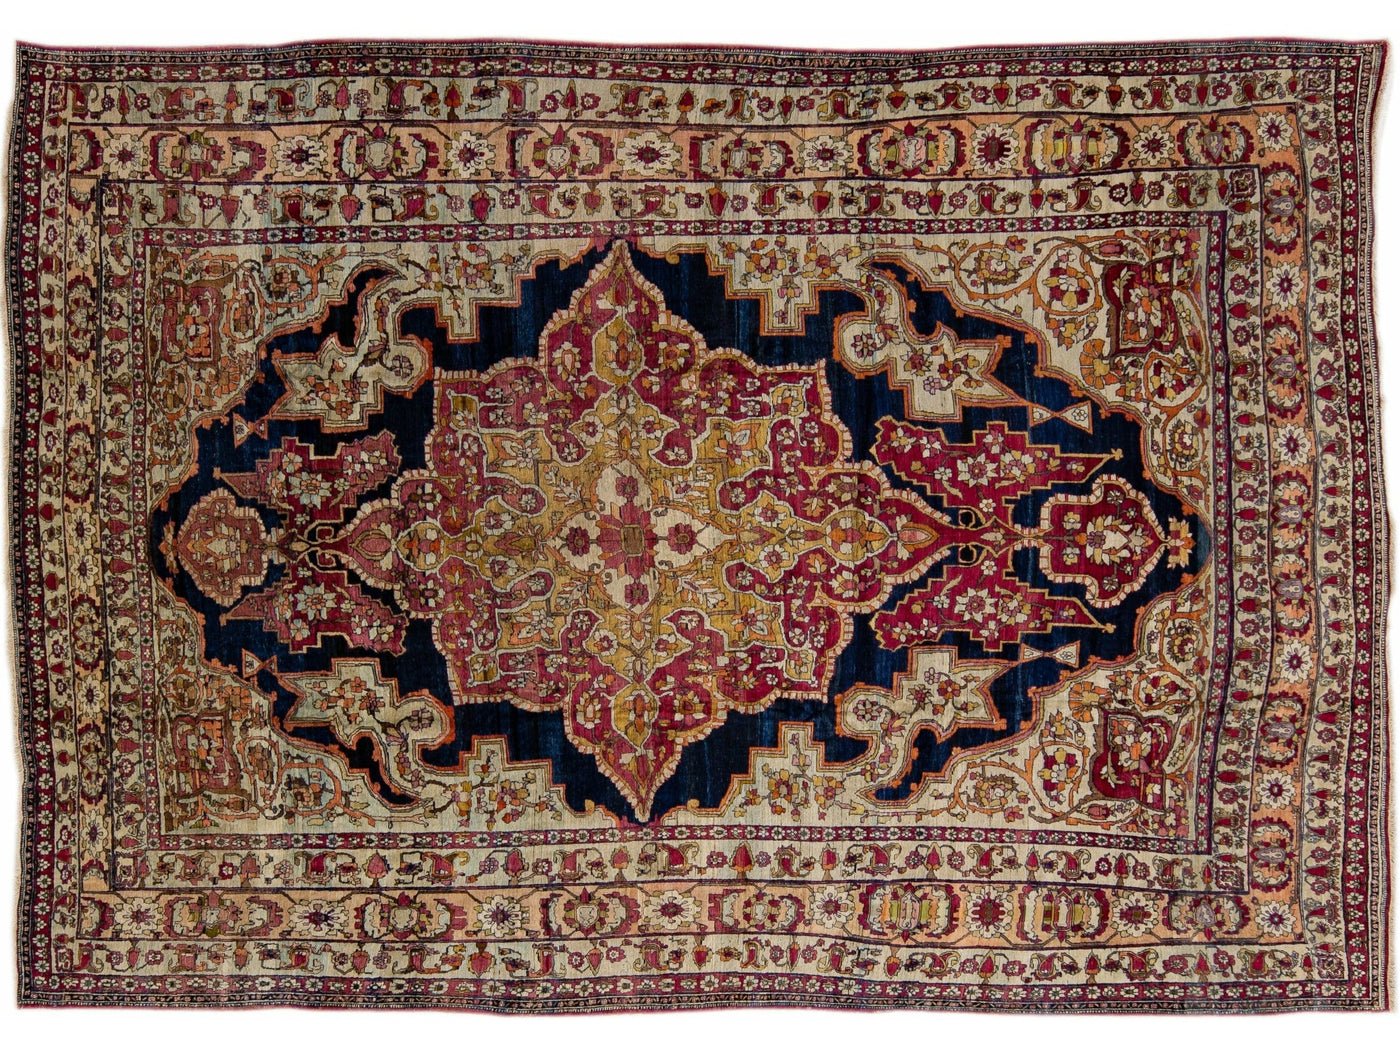 Antique Kerman Handmade Red and Blue Floral Medallion Motif Wool Rug